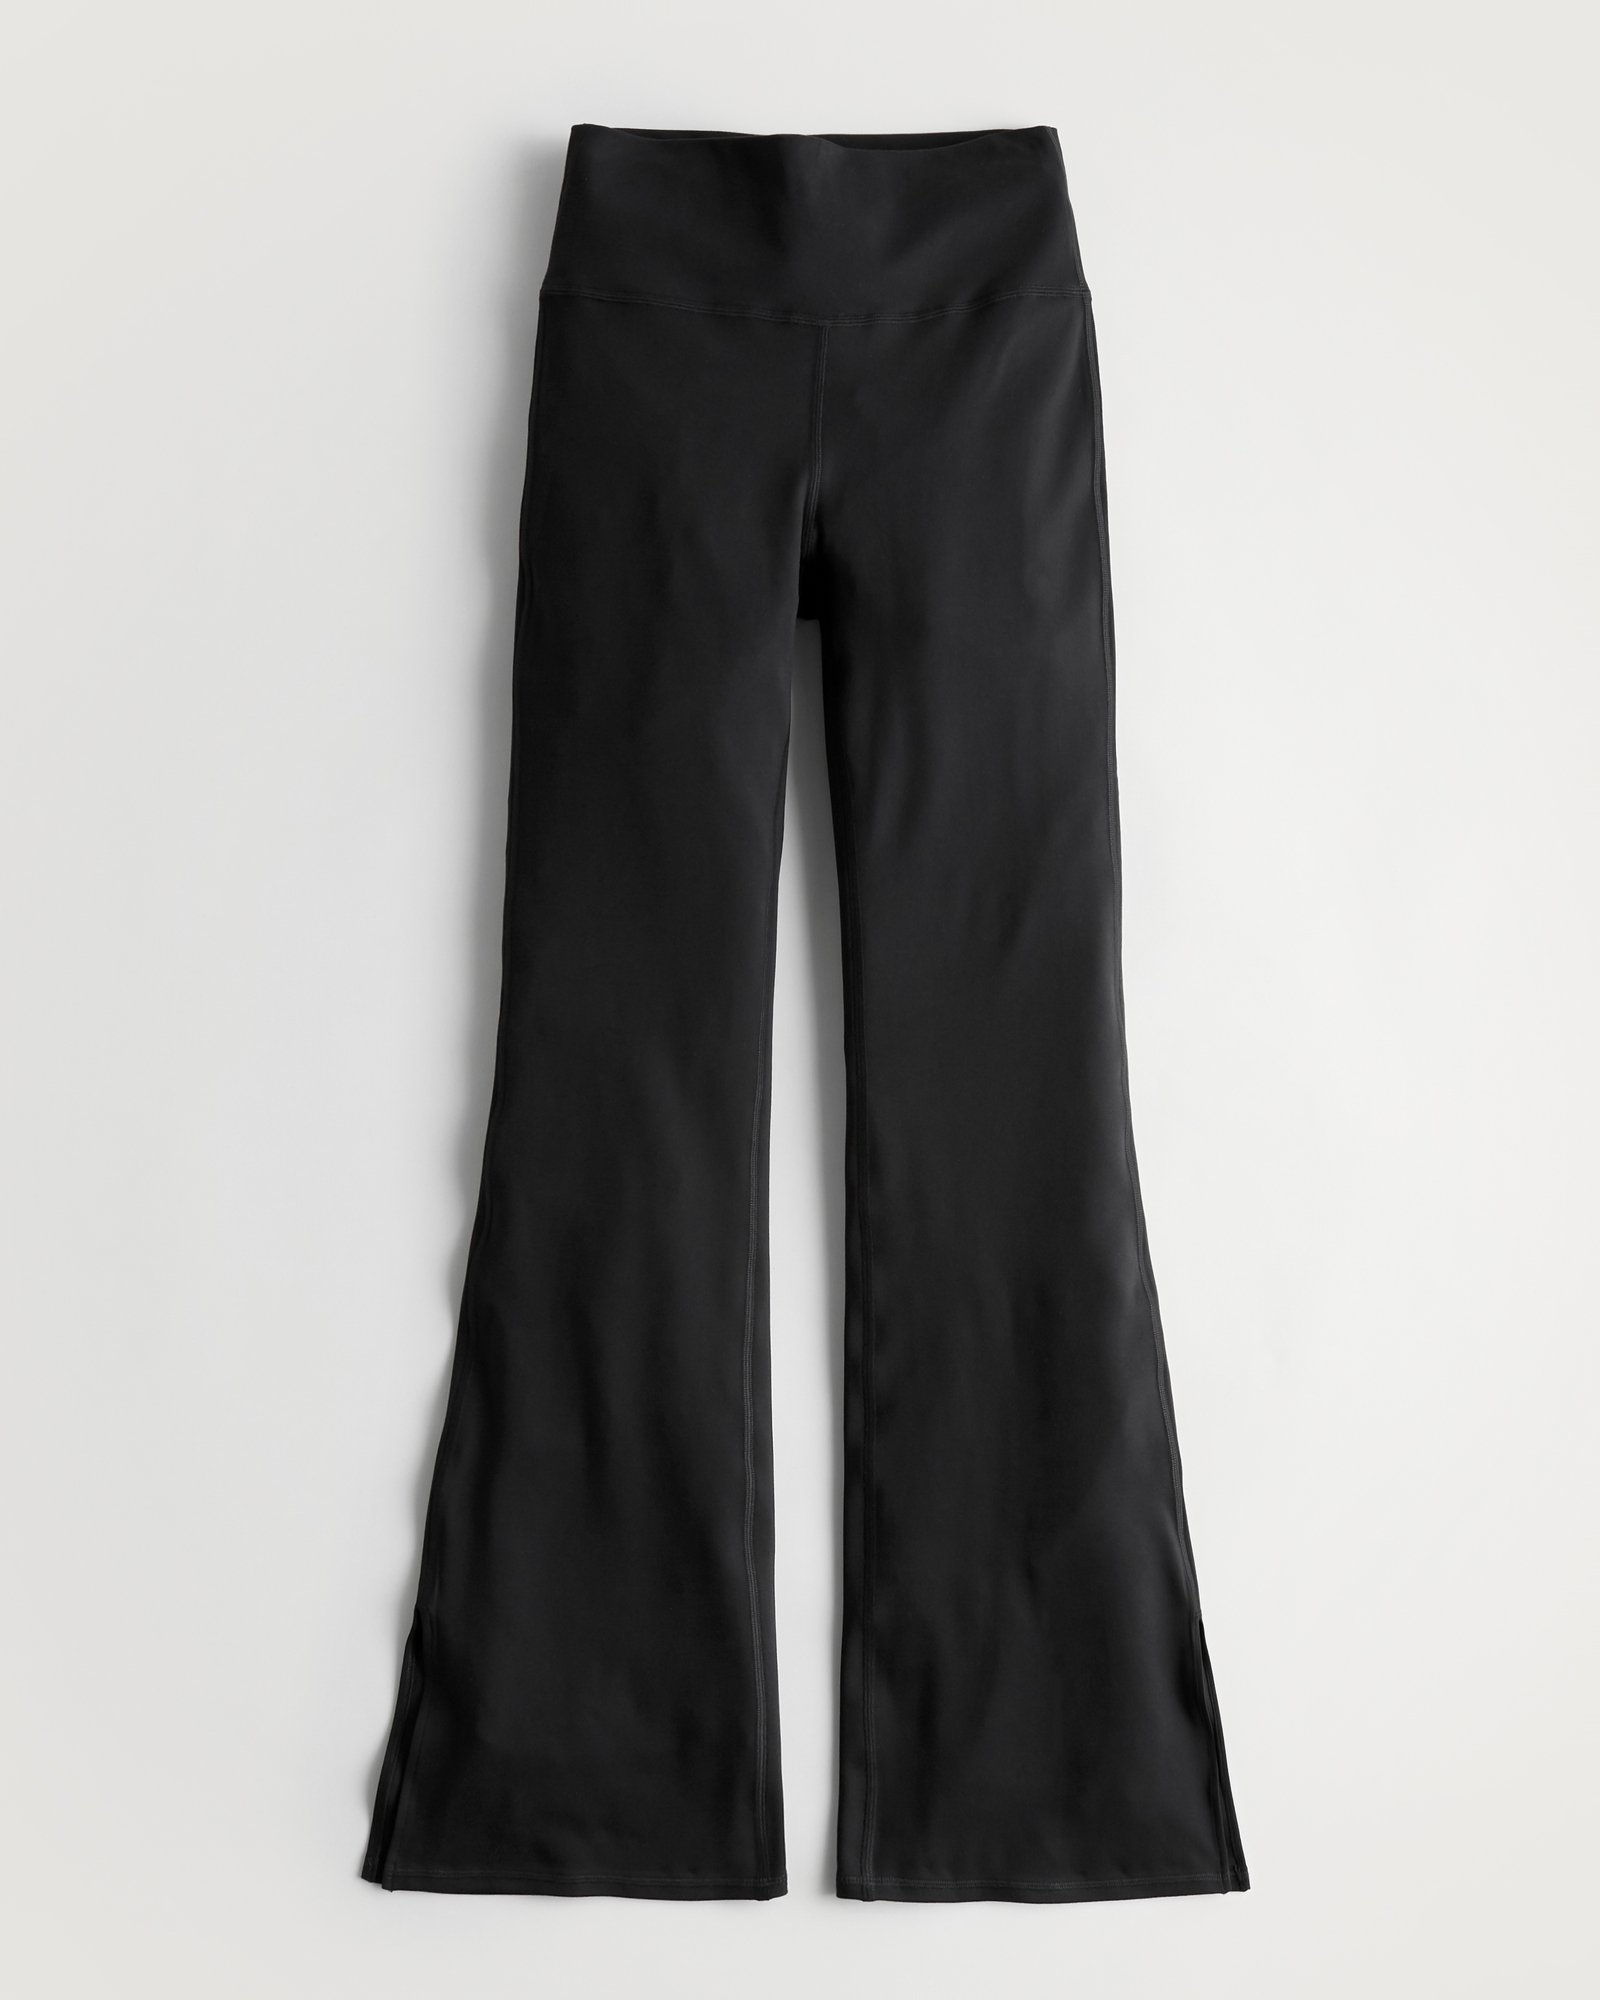 Hollister Flare Leggings Black - $17 (51% Off Retail) - From kaylee